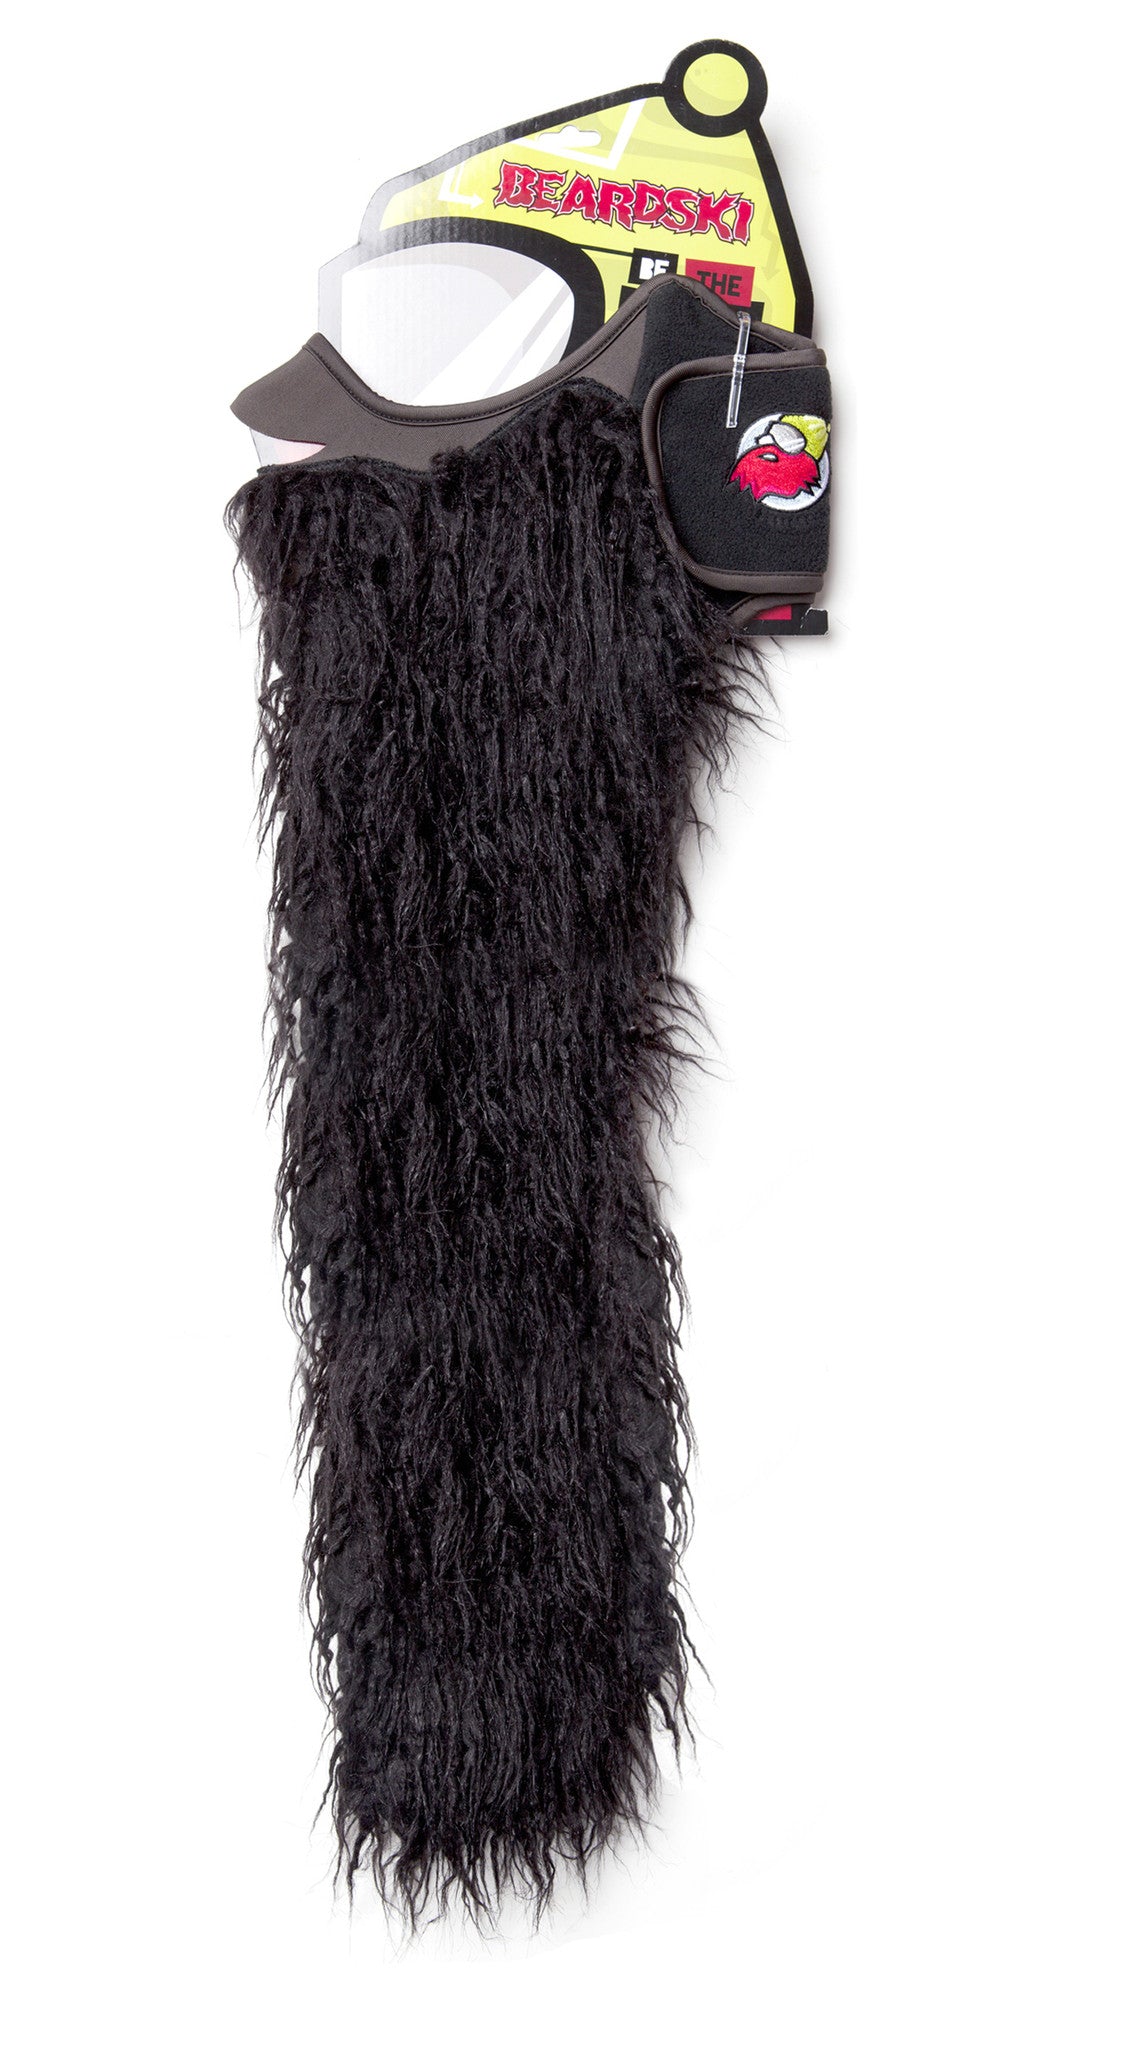 Beardski Black Pearl Skimask